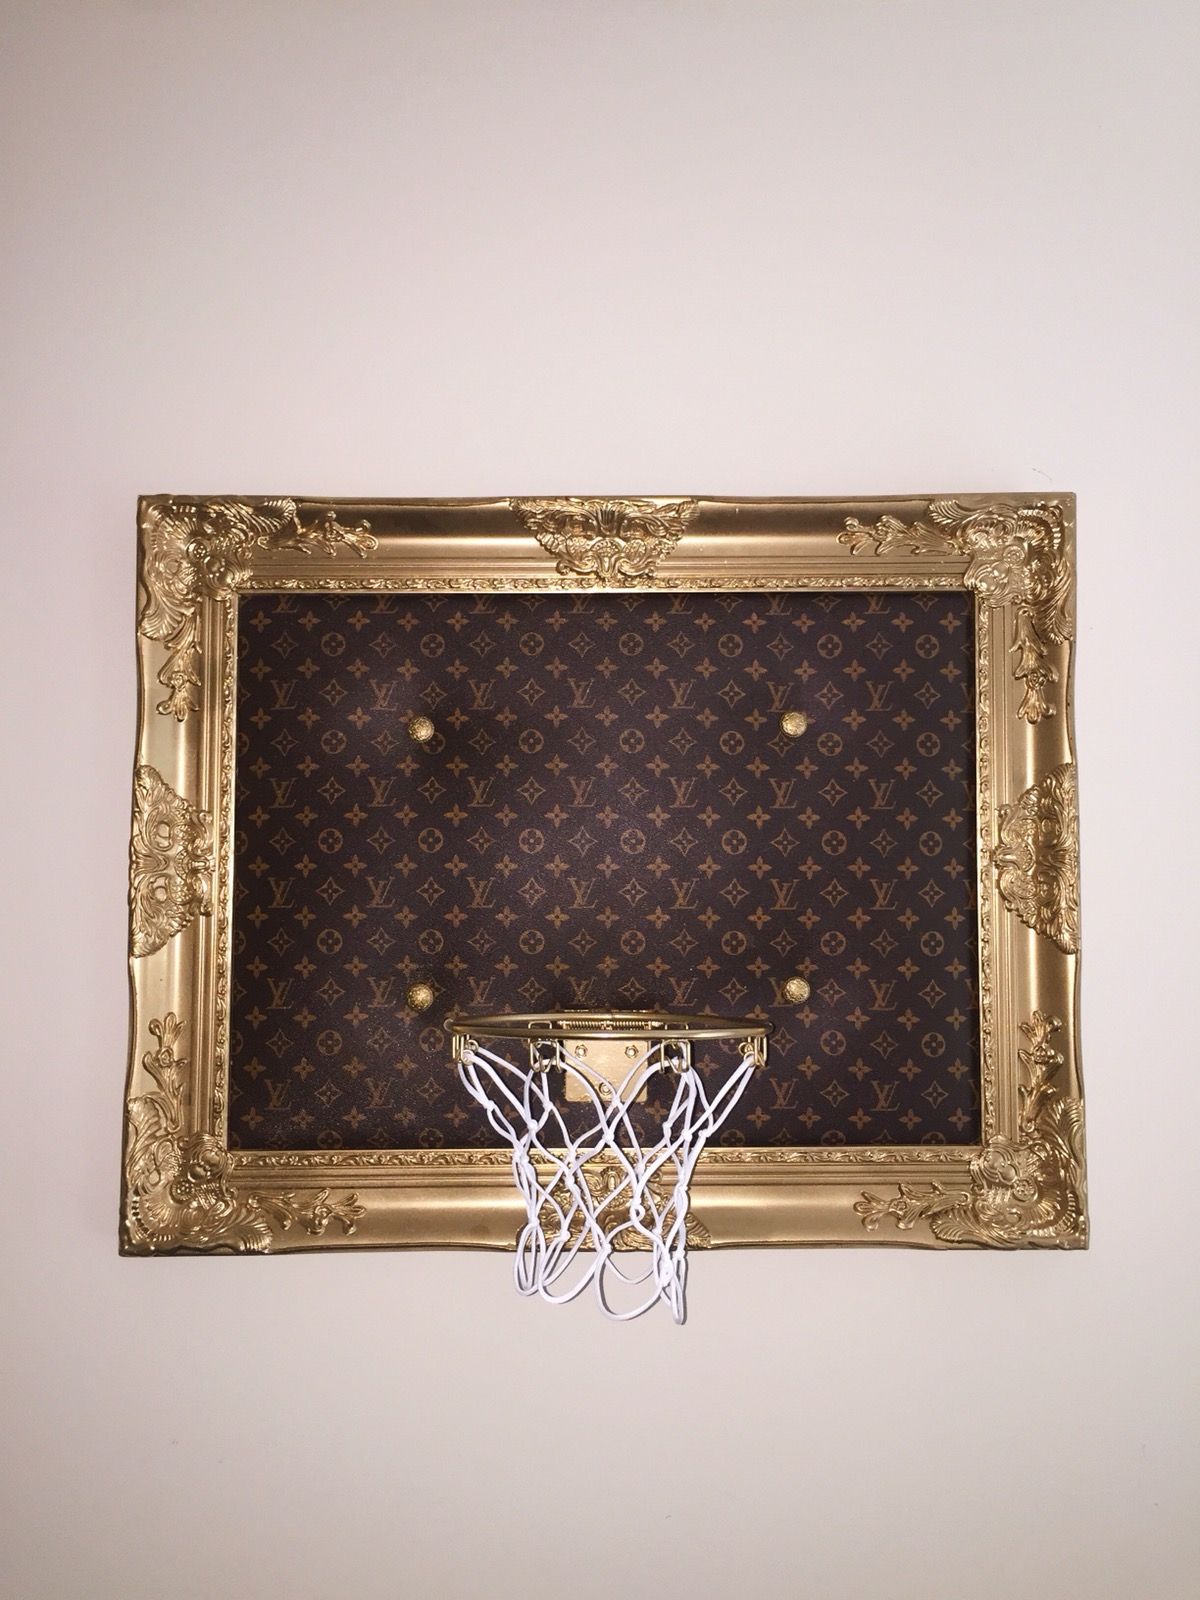 Louis Vuitton × NBA Basketball Hoop #louisvuitton